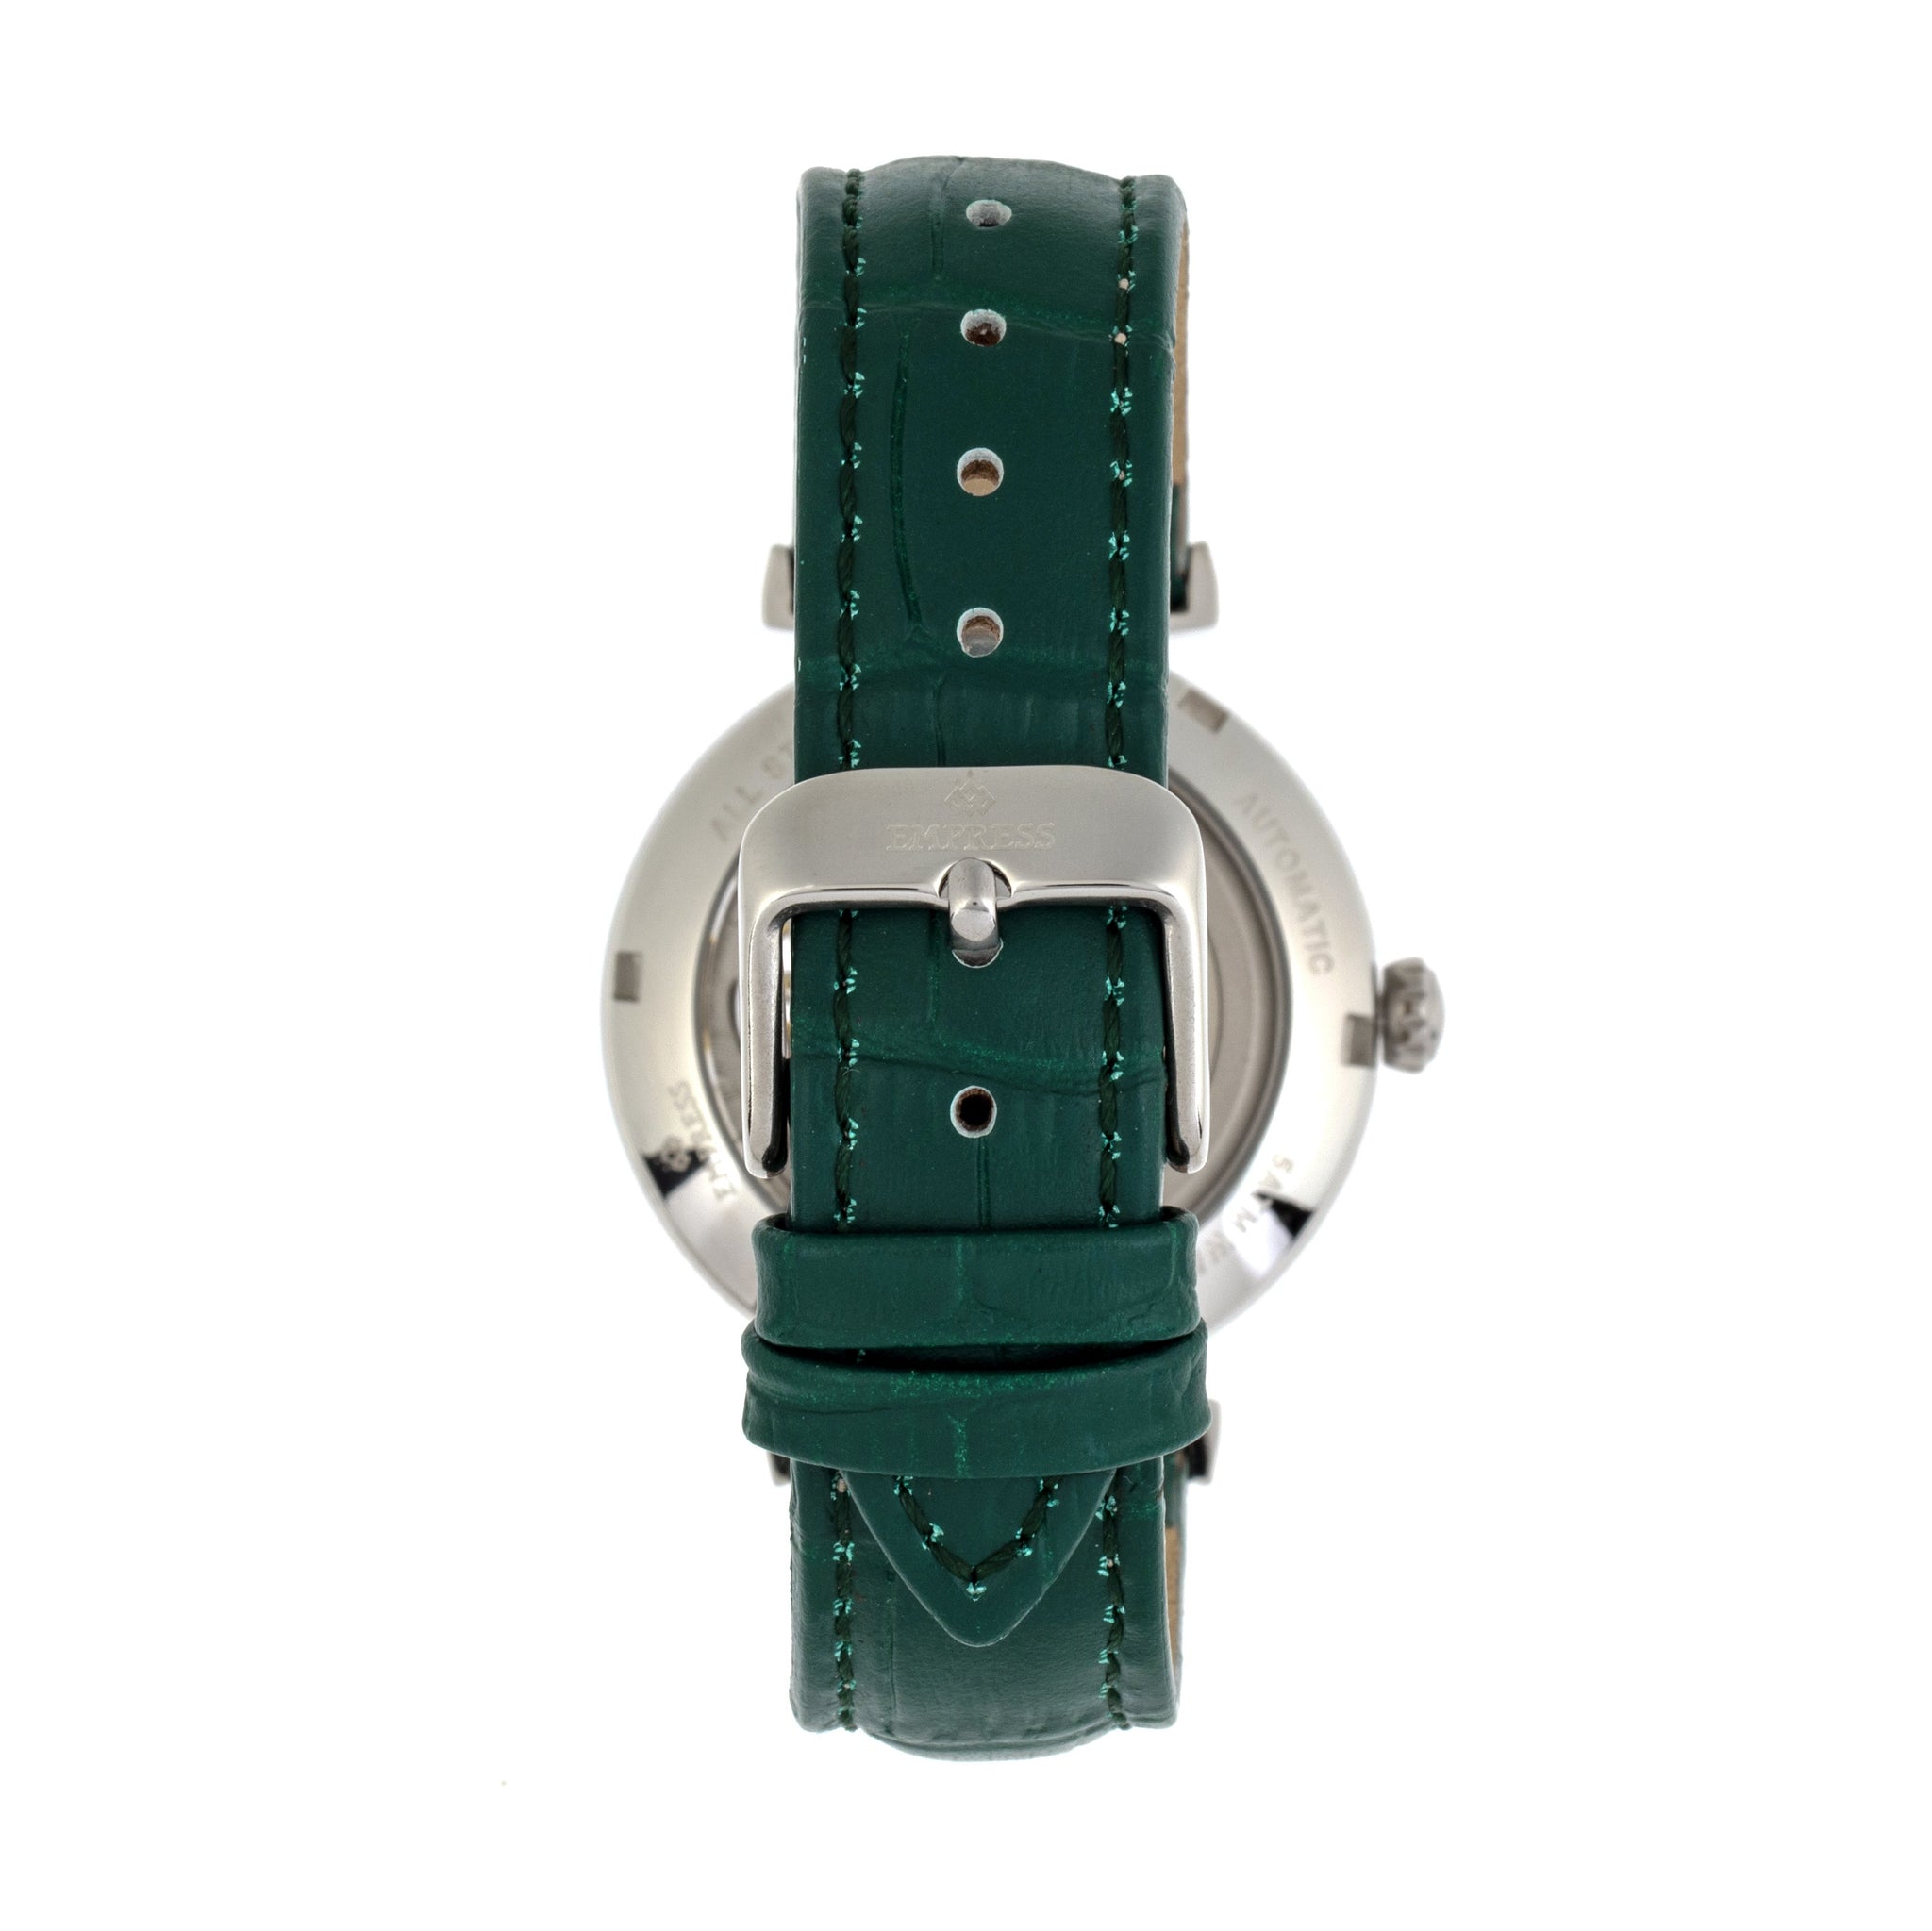 Empress Edith Semi-Skeleton Leather-Band Watch - Green - EMPEM3302